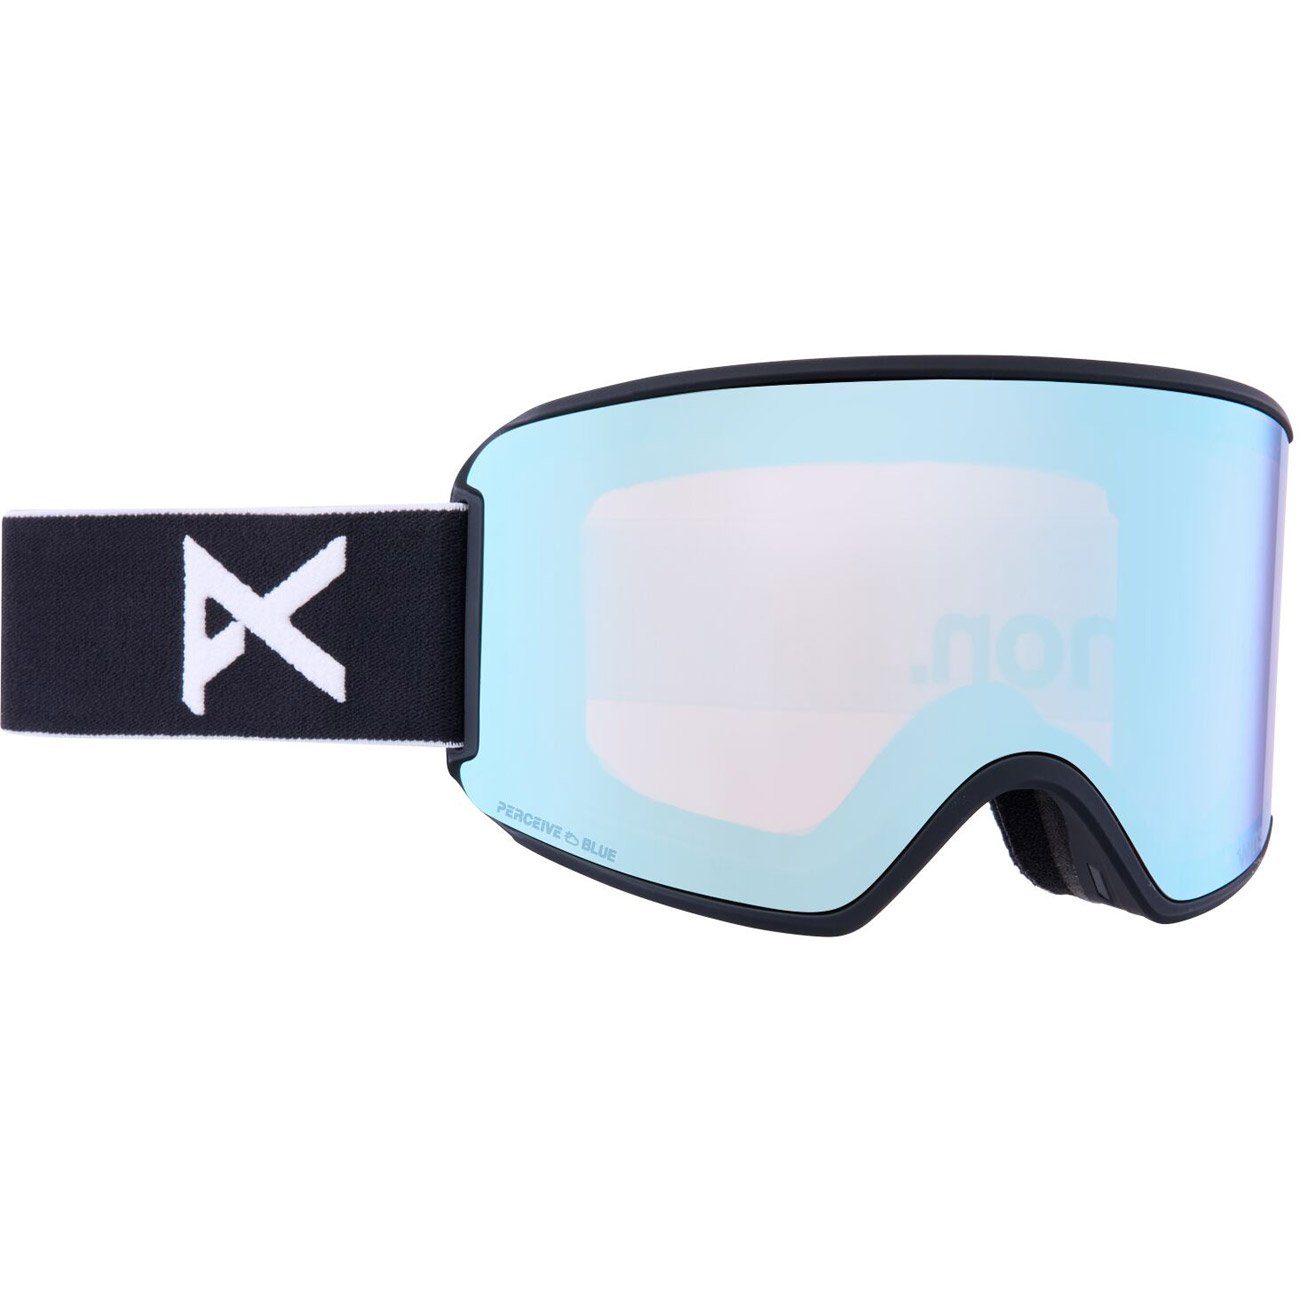 WM3 vrbl MFI blue Anon BONUS black/prcv LINSE + Snowboardbrille,